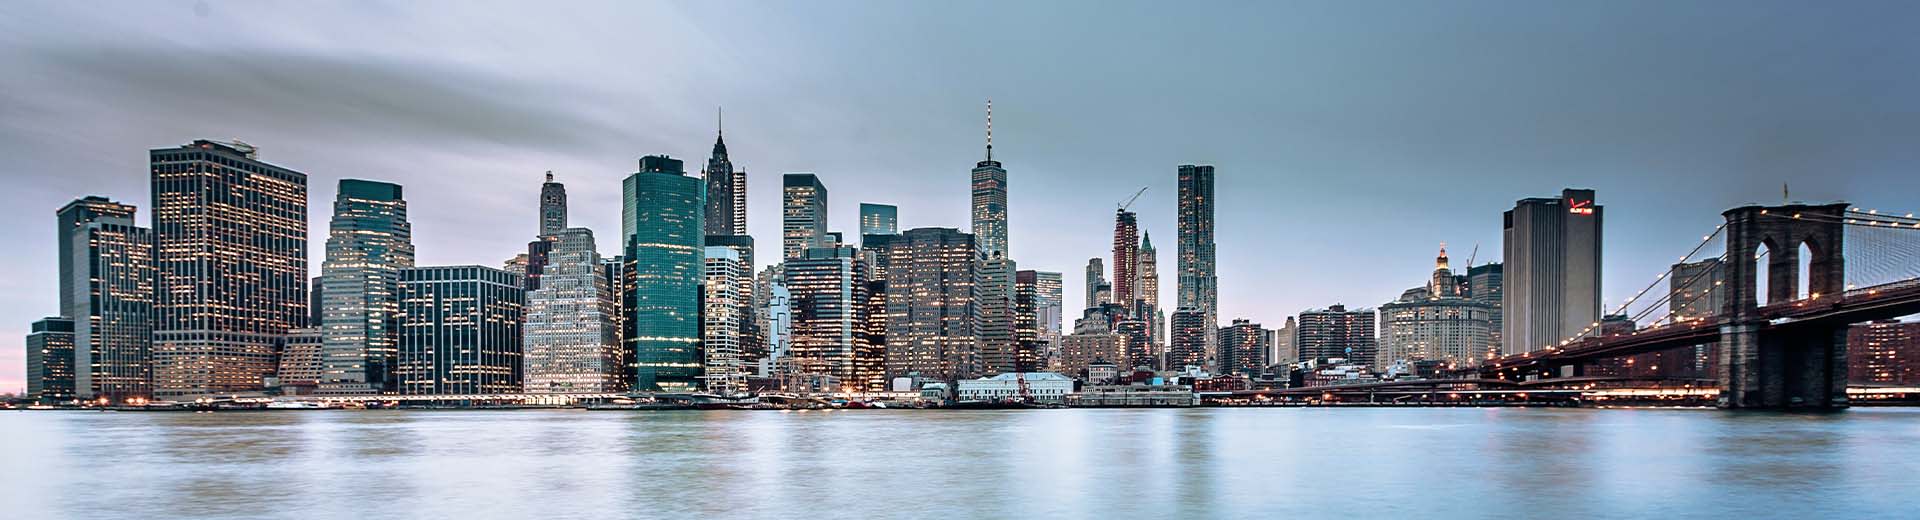 Manhattan skyline lights up the sky at dusk or dawn.